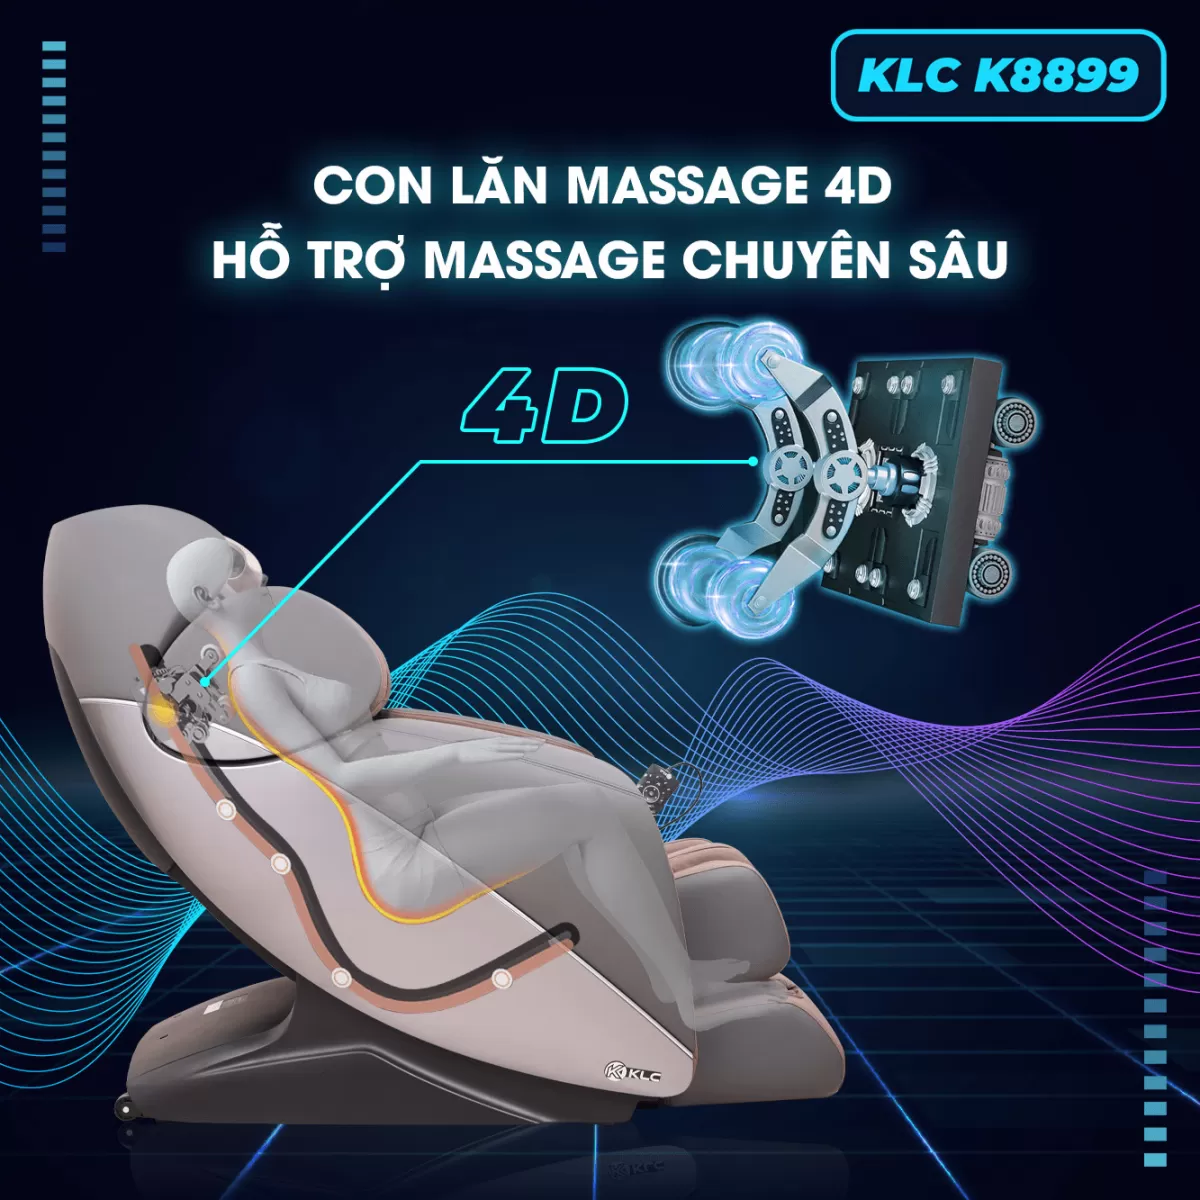 Con lăn massage 4D của Ghế Massage KLC K8899